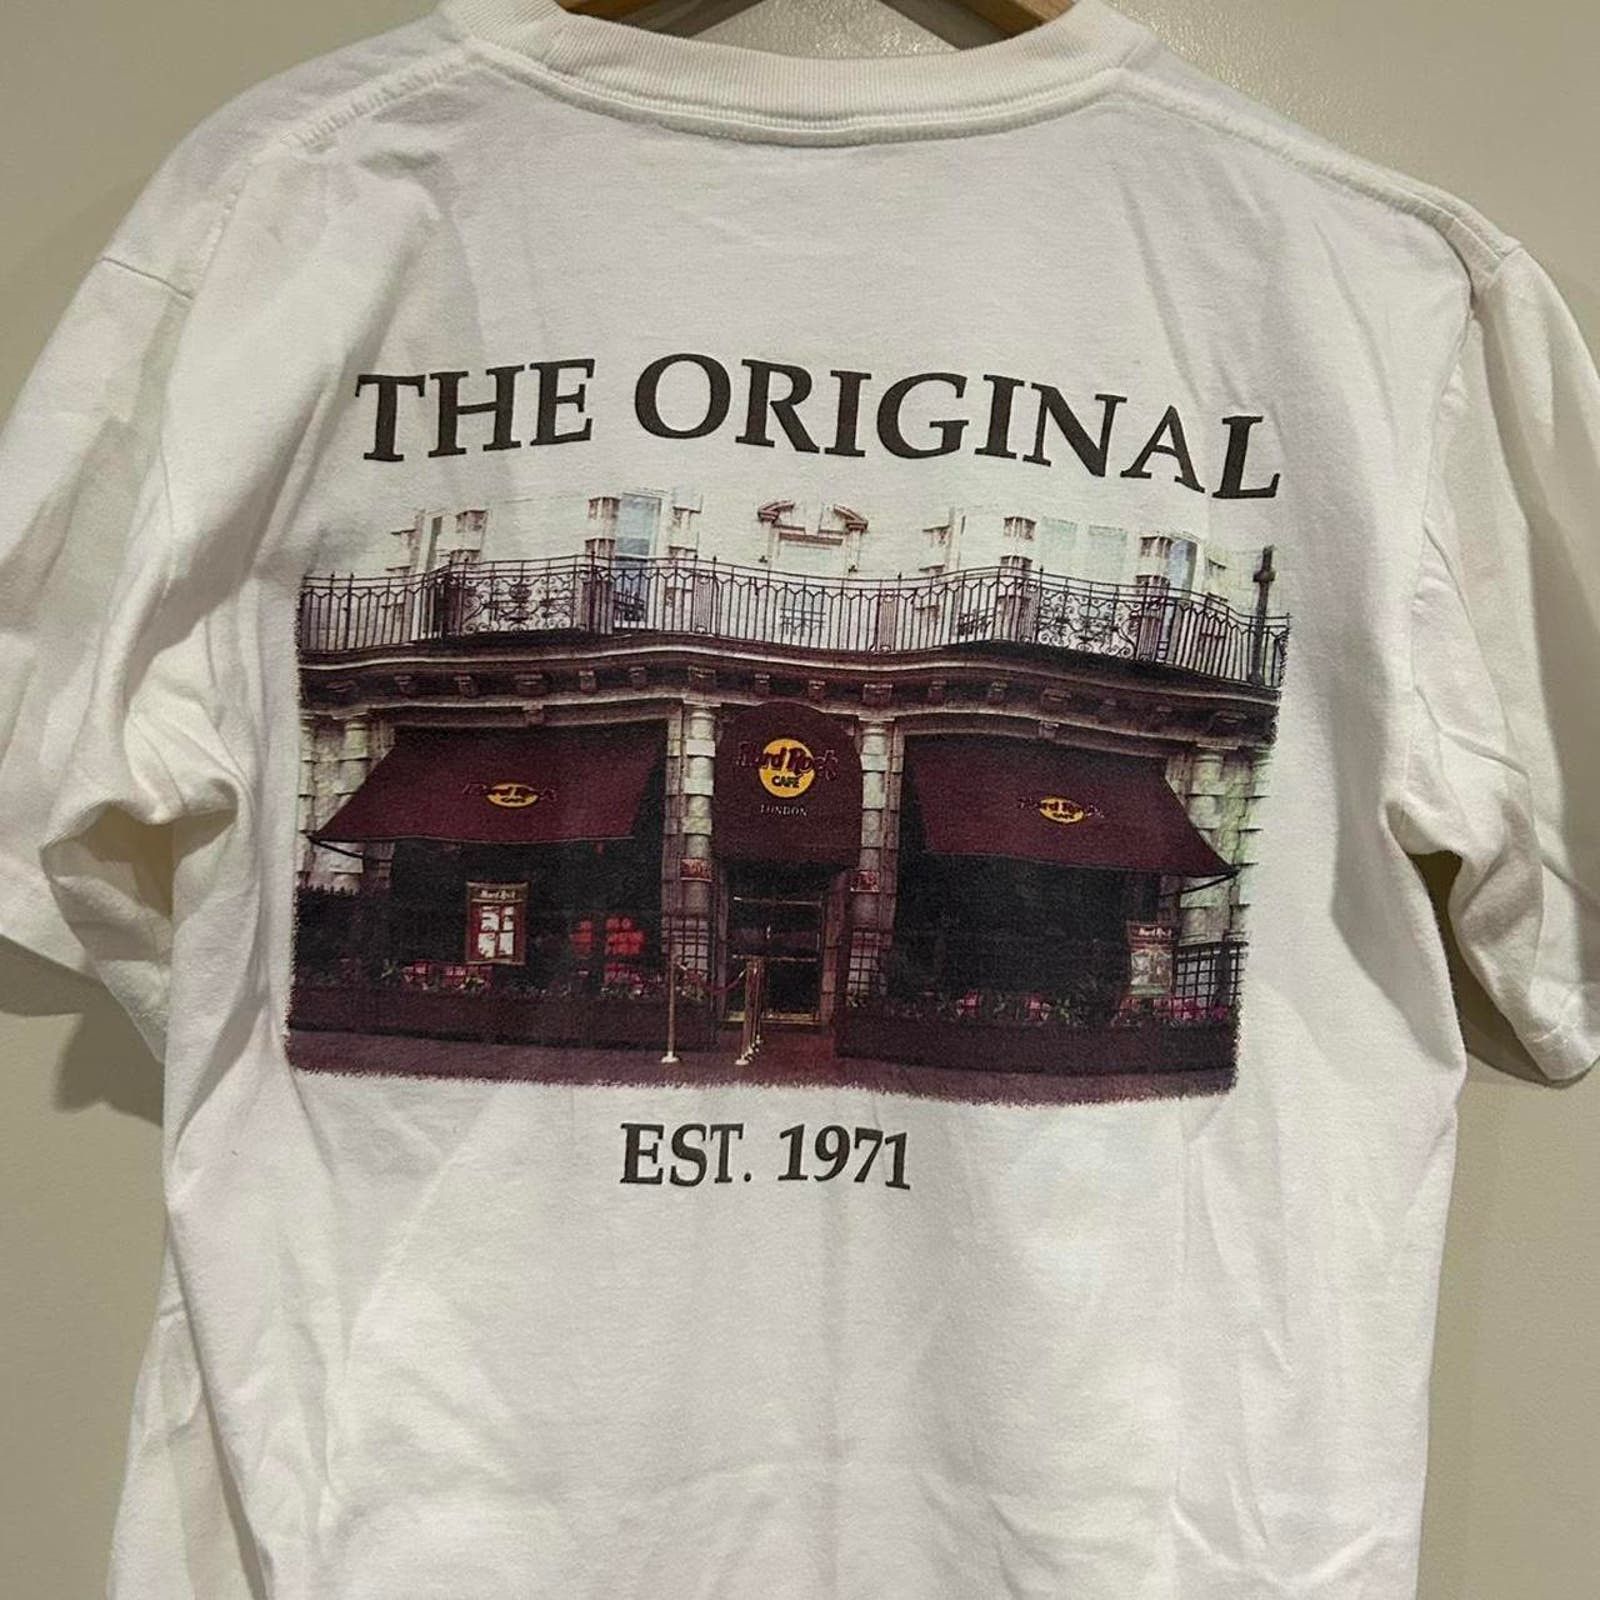 Hard Rock Cafe Vintage Hard Rock Cafe London The Original Tee Shirt Size US M / EU 48-50 / 2 - 2 Preview